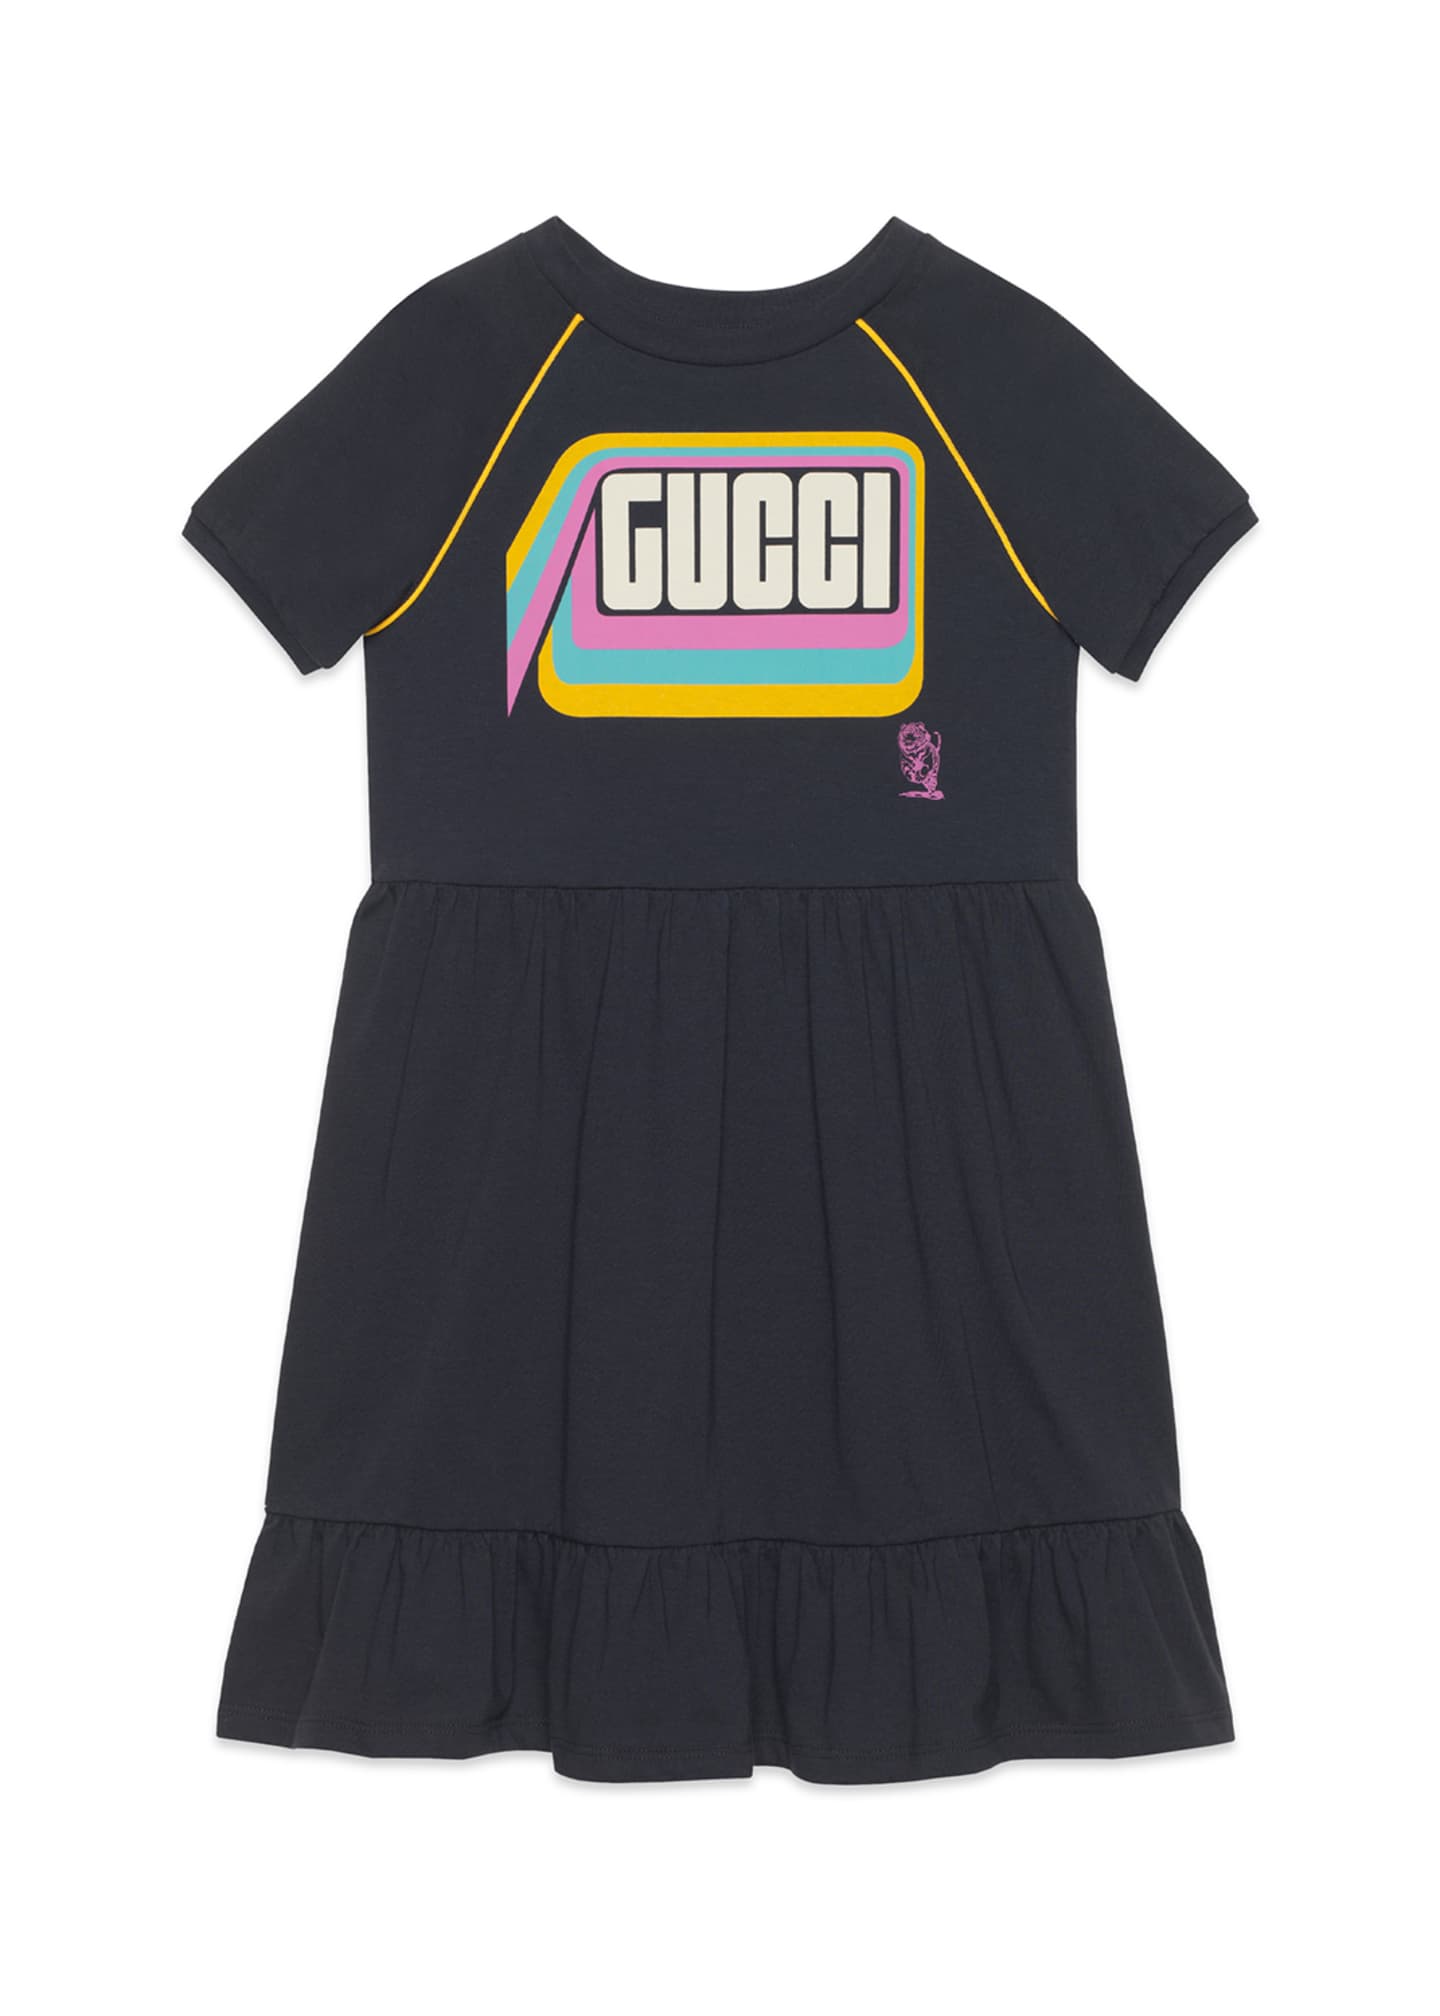 Gucci Mod Logo Graphic Short Sleeve Dress W Ruffle Hem Size 4 12